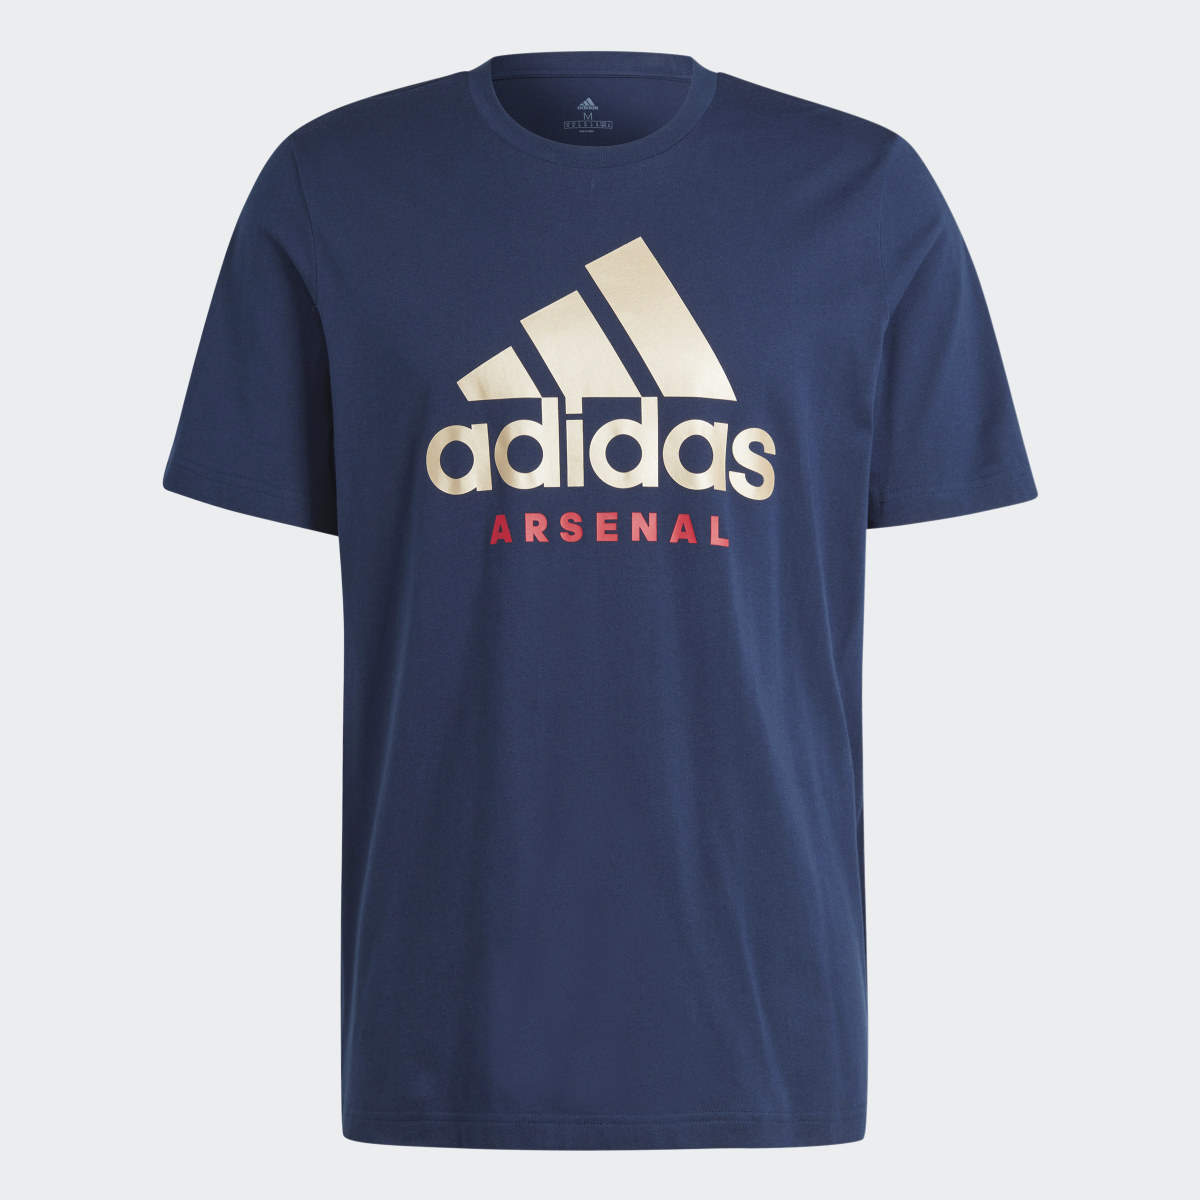 Adidas Arsenal Street Graphic T-Shirt. 5